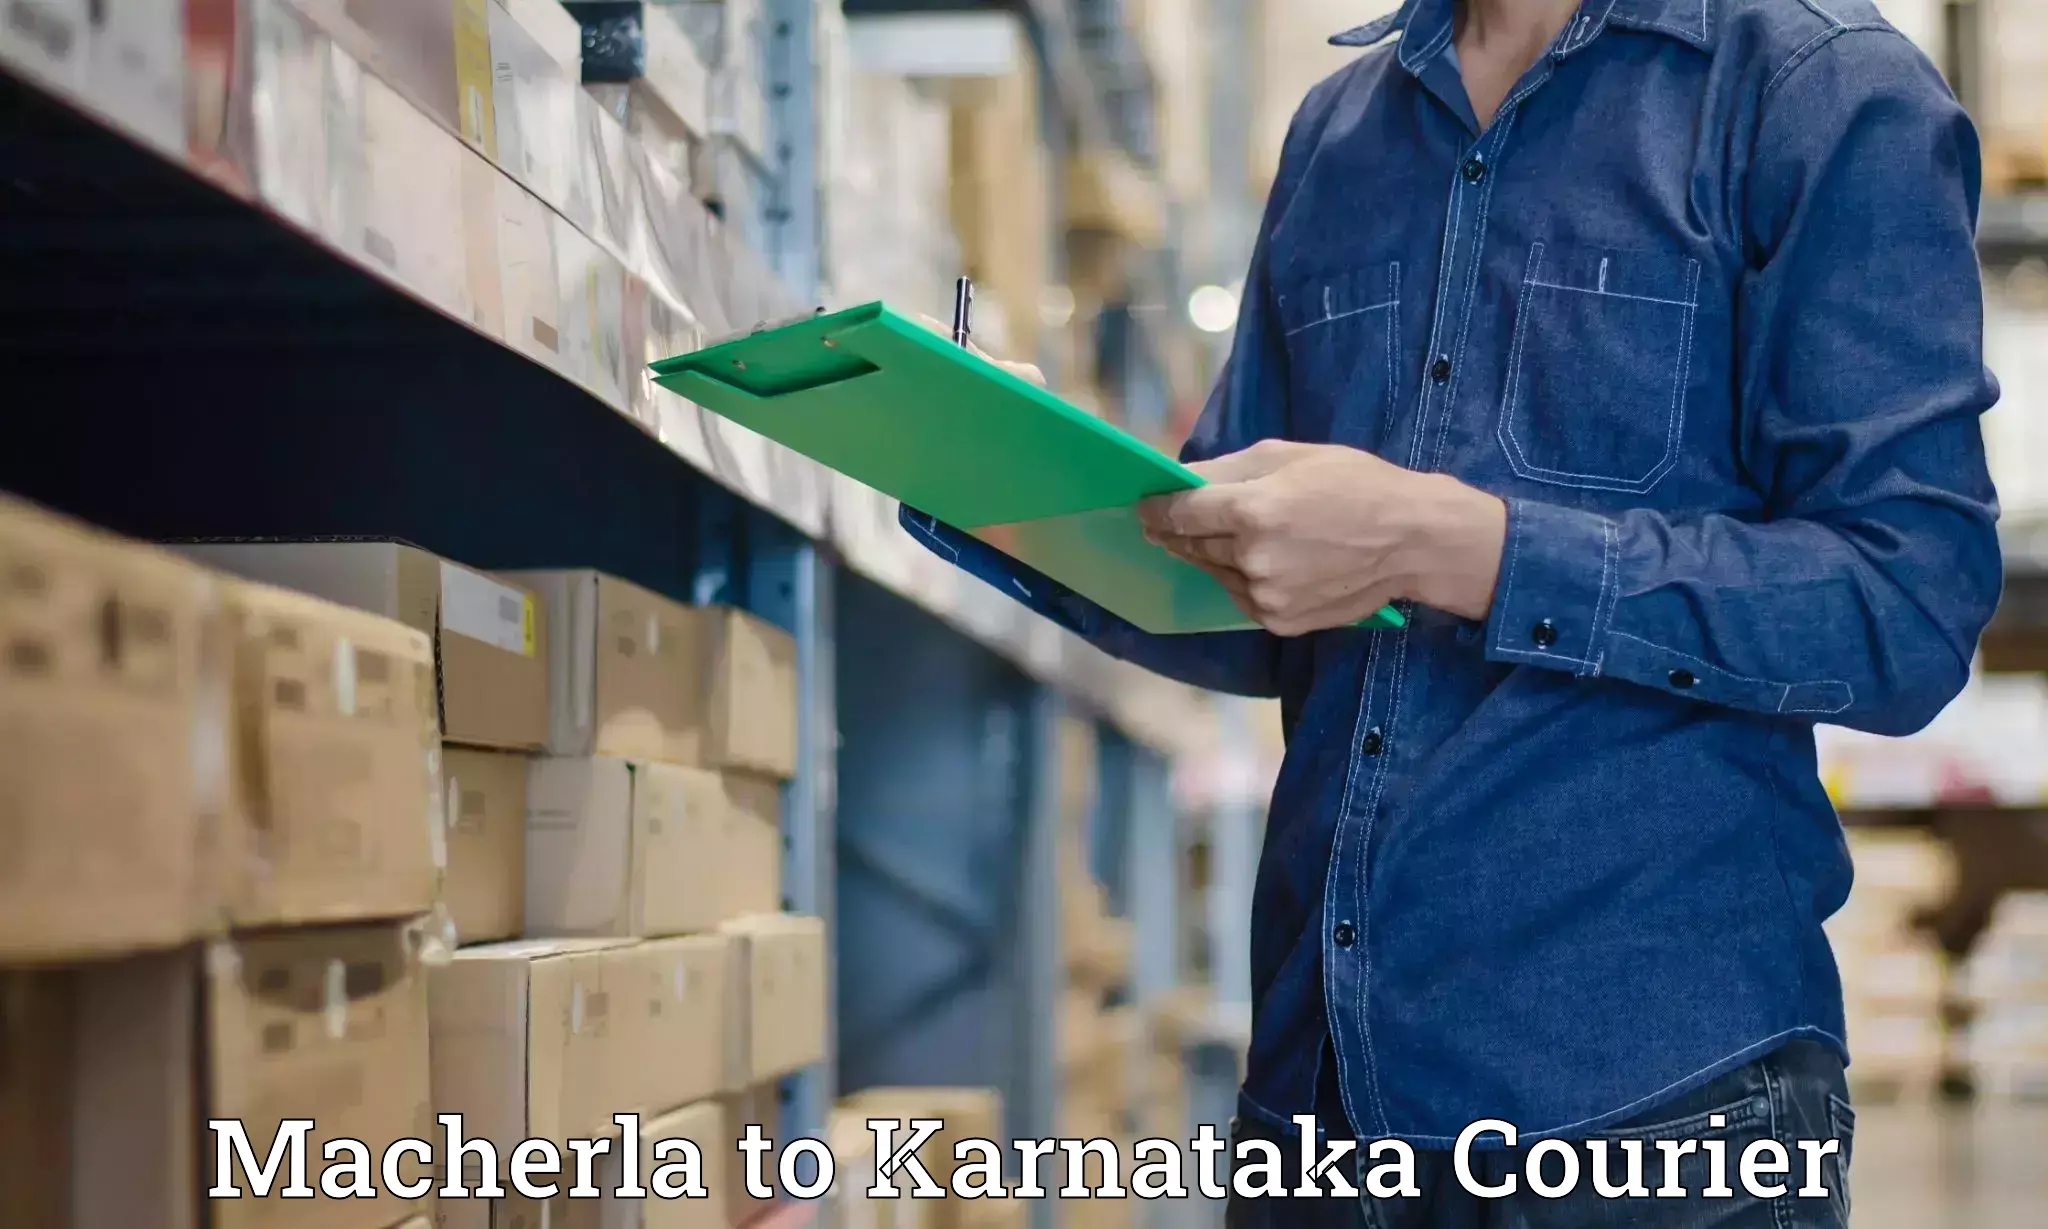 Courier service innovation Macherla to Karnataka